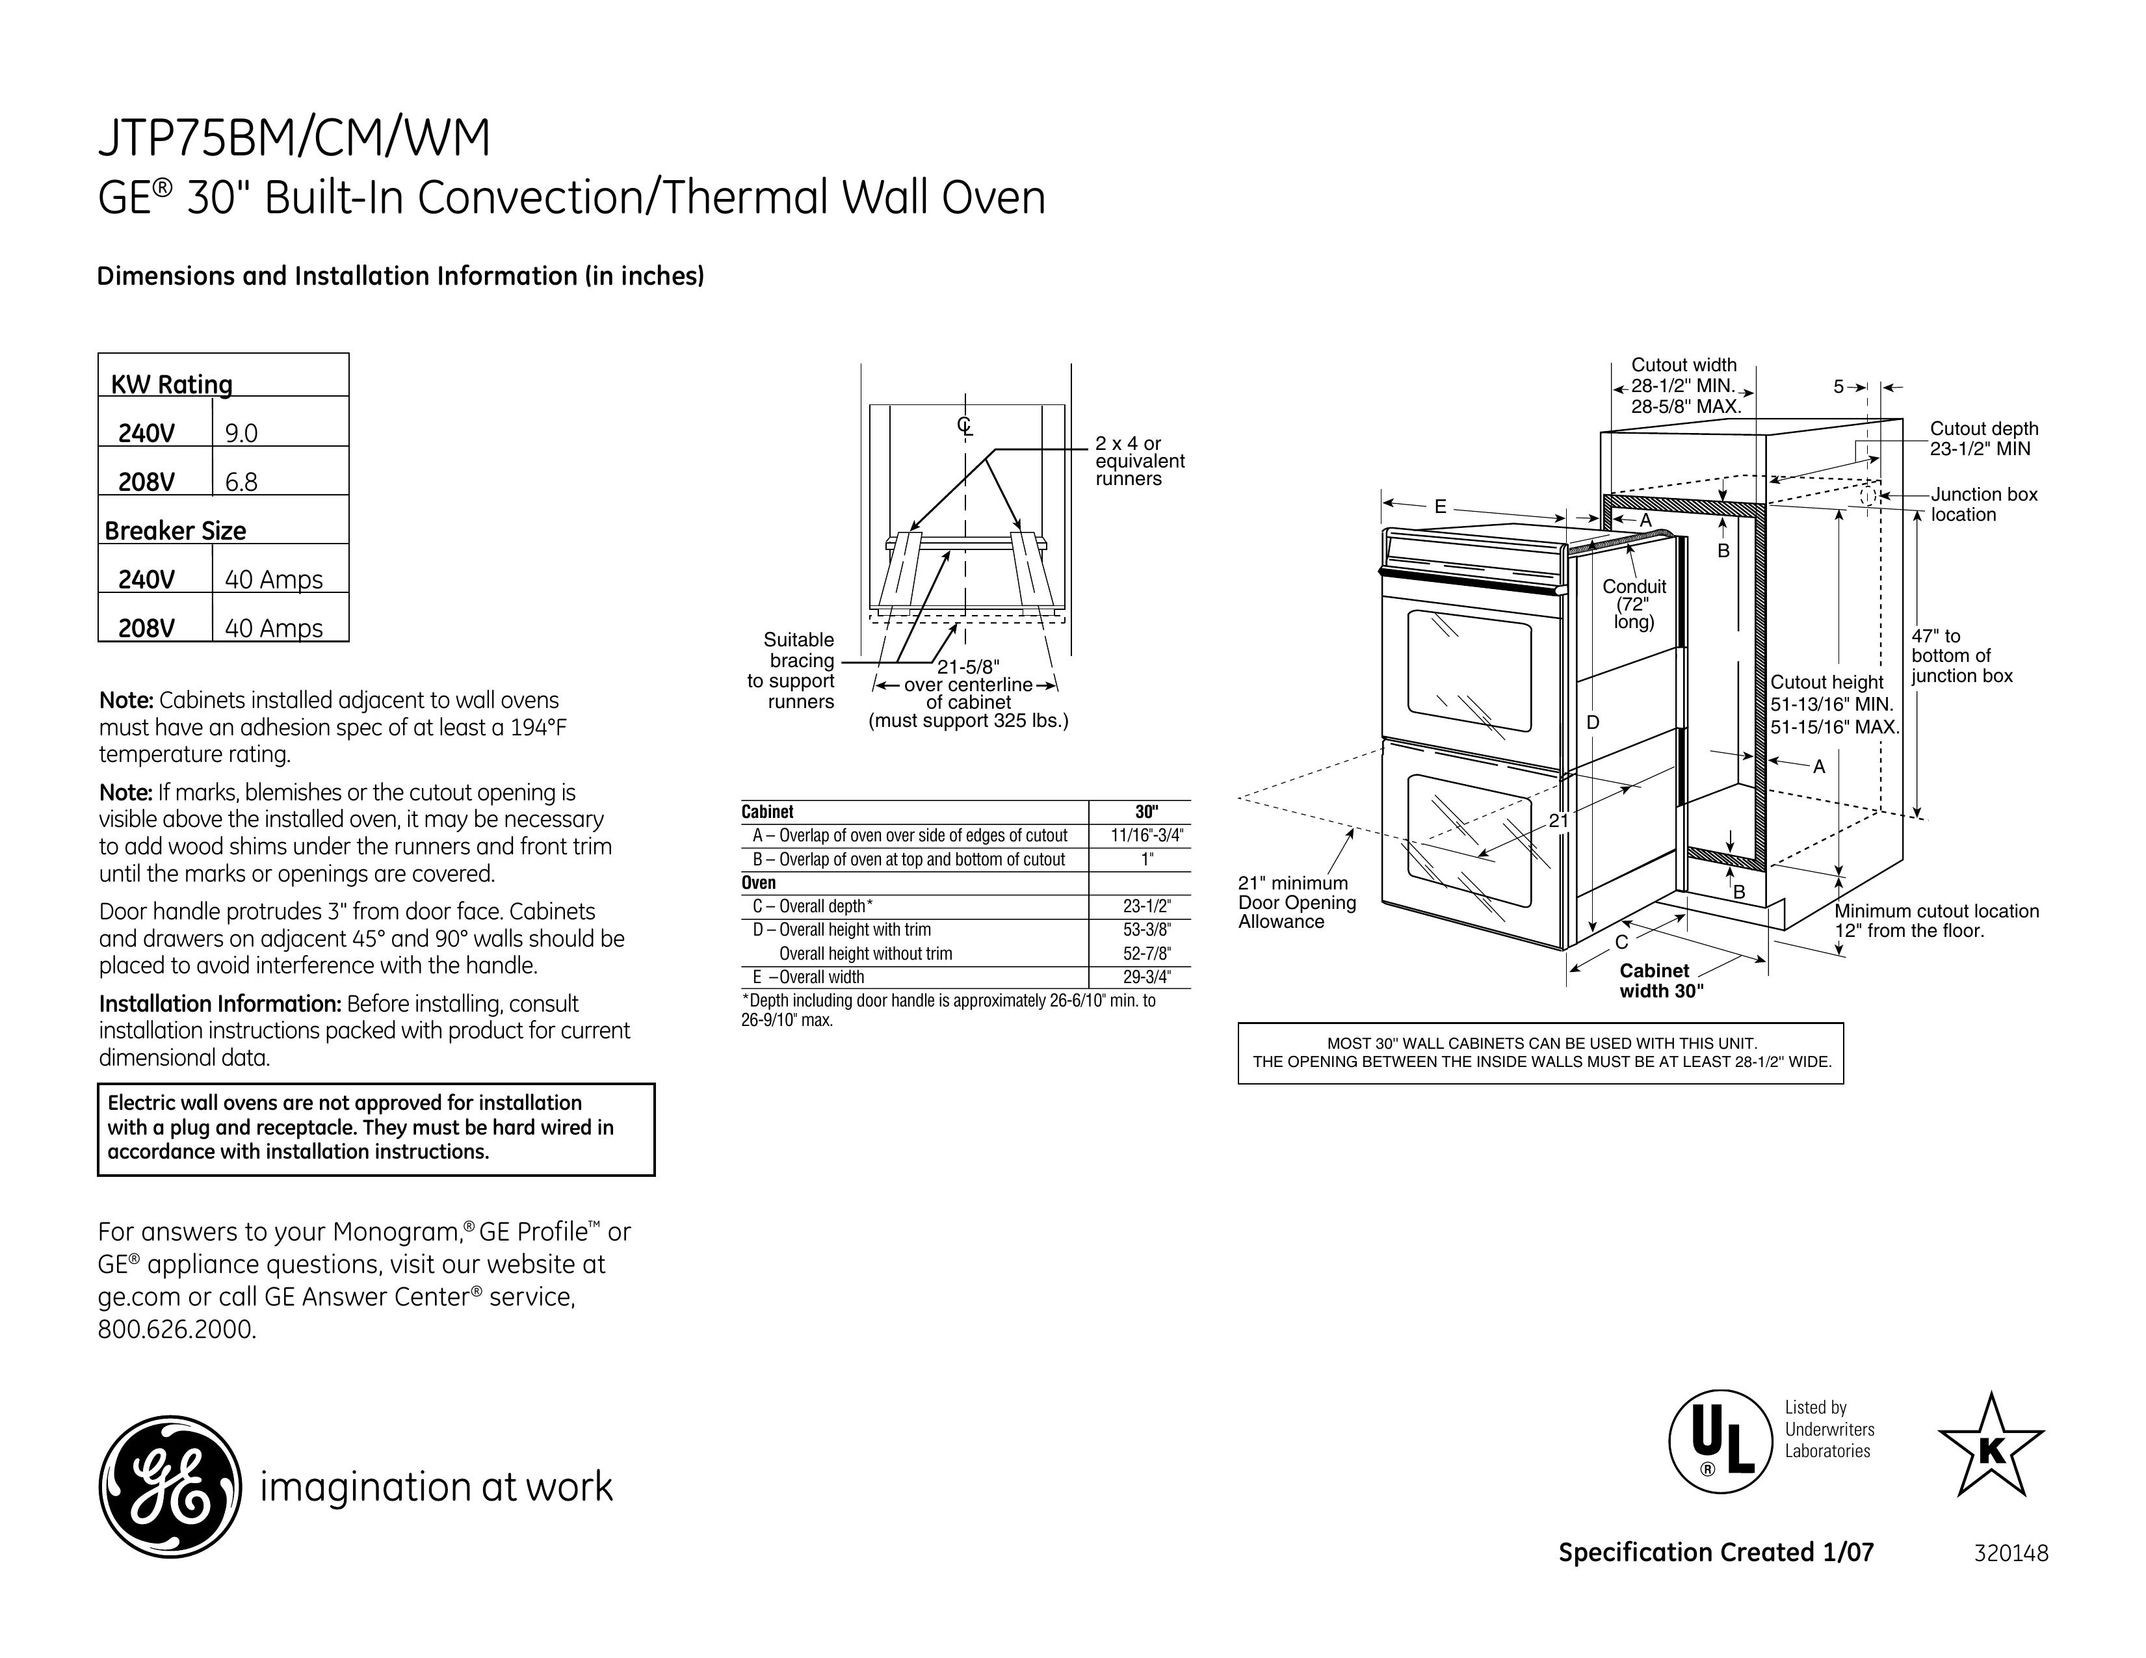 GE JTP75BM Convection Oven User Manual